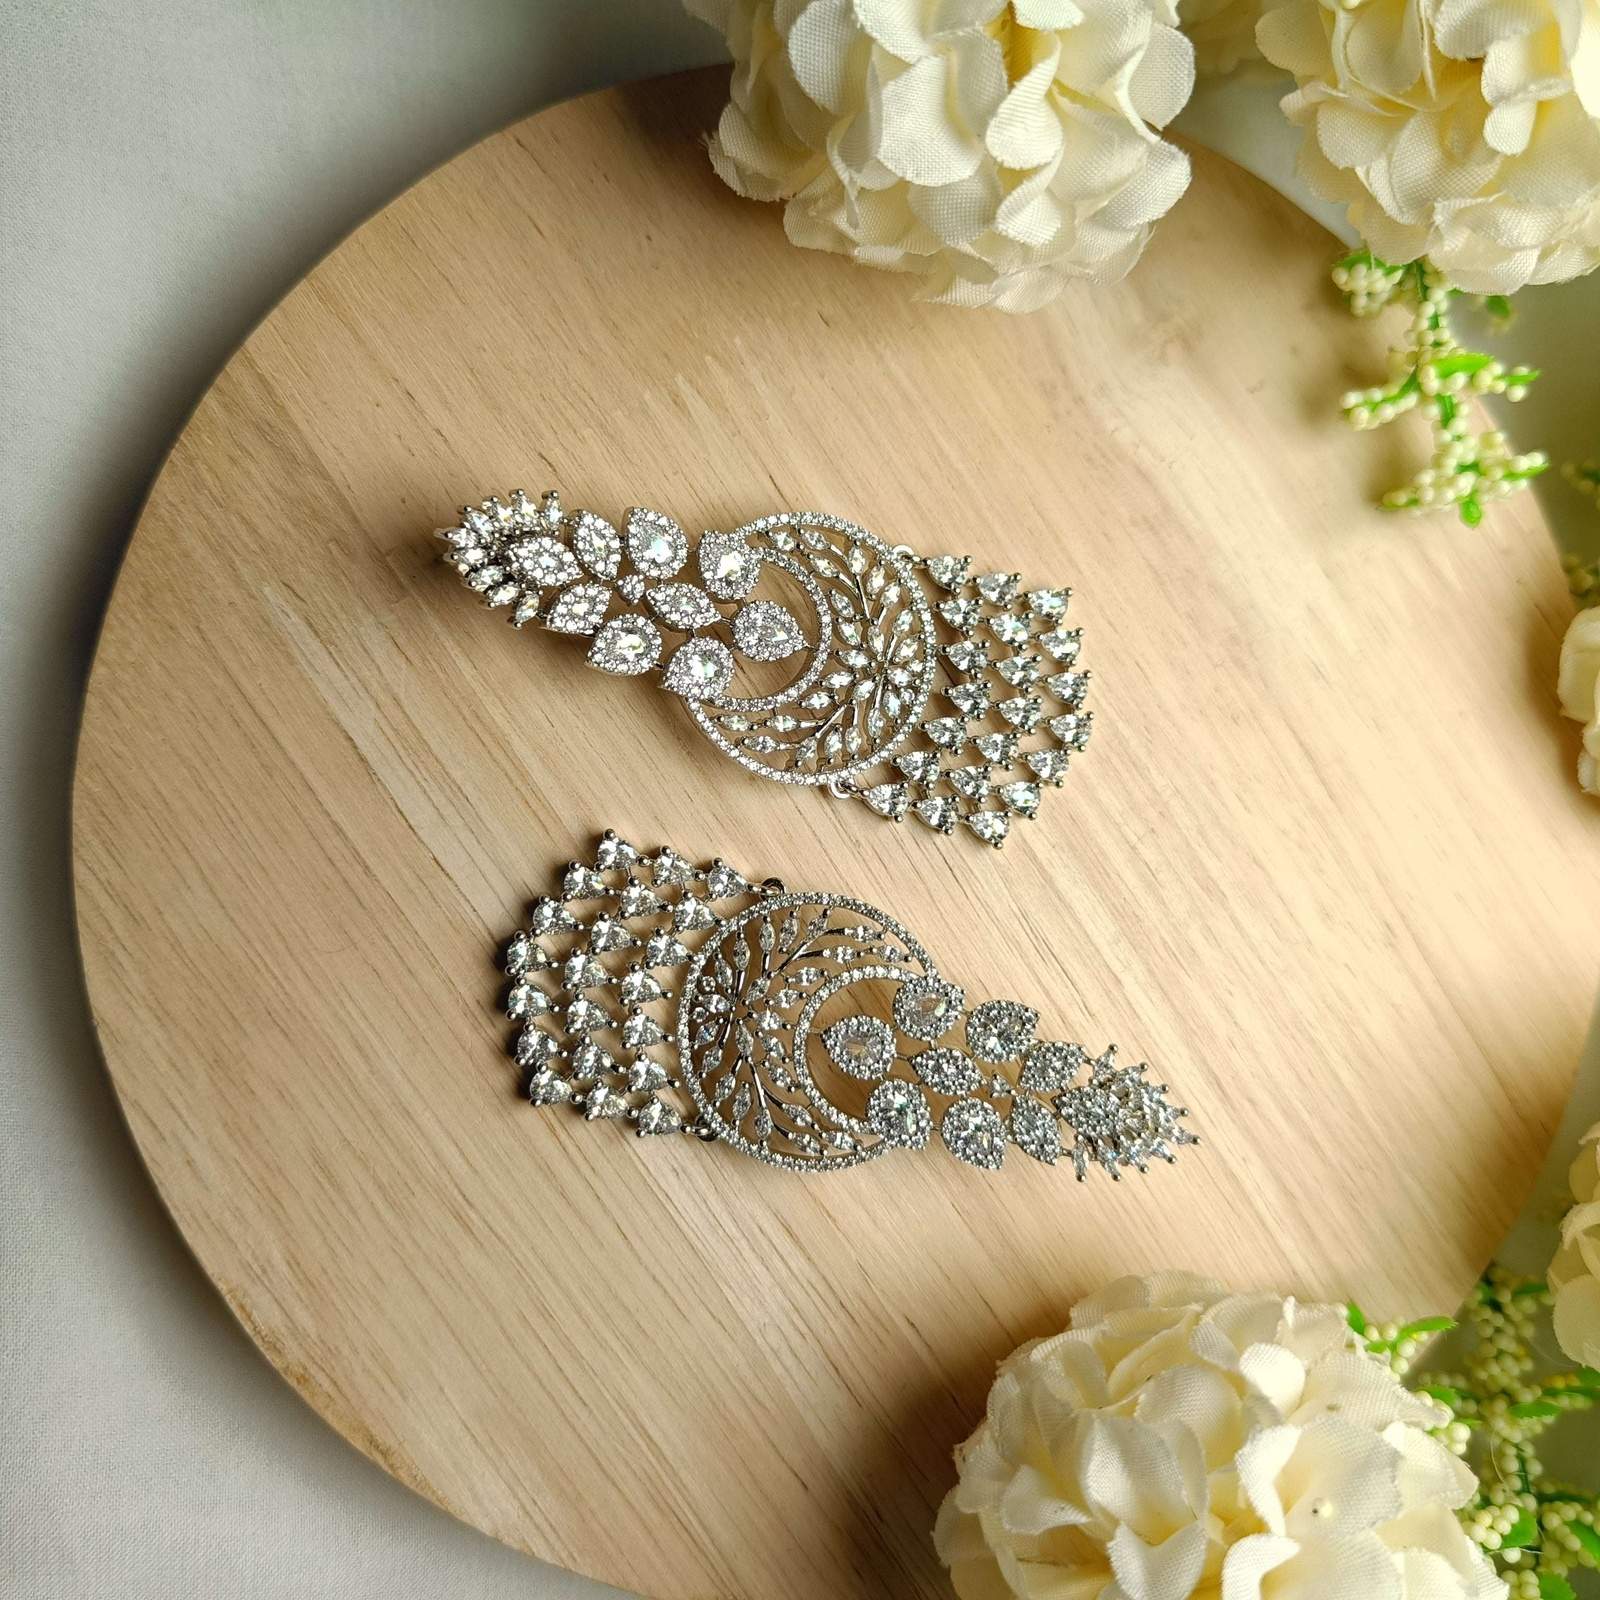 Ad Anaysha earrings Velvet box by Shweta